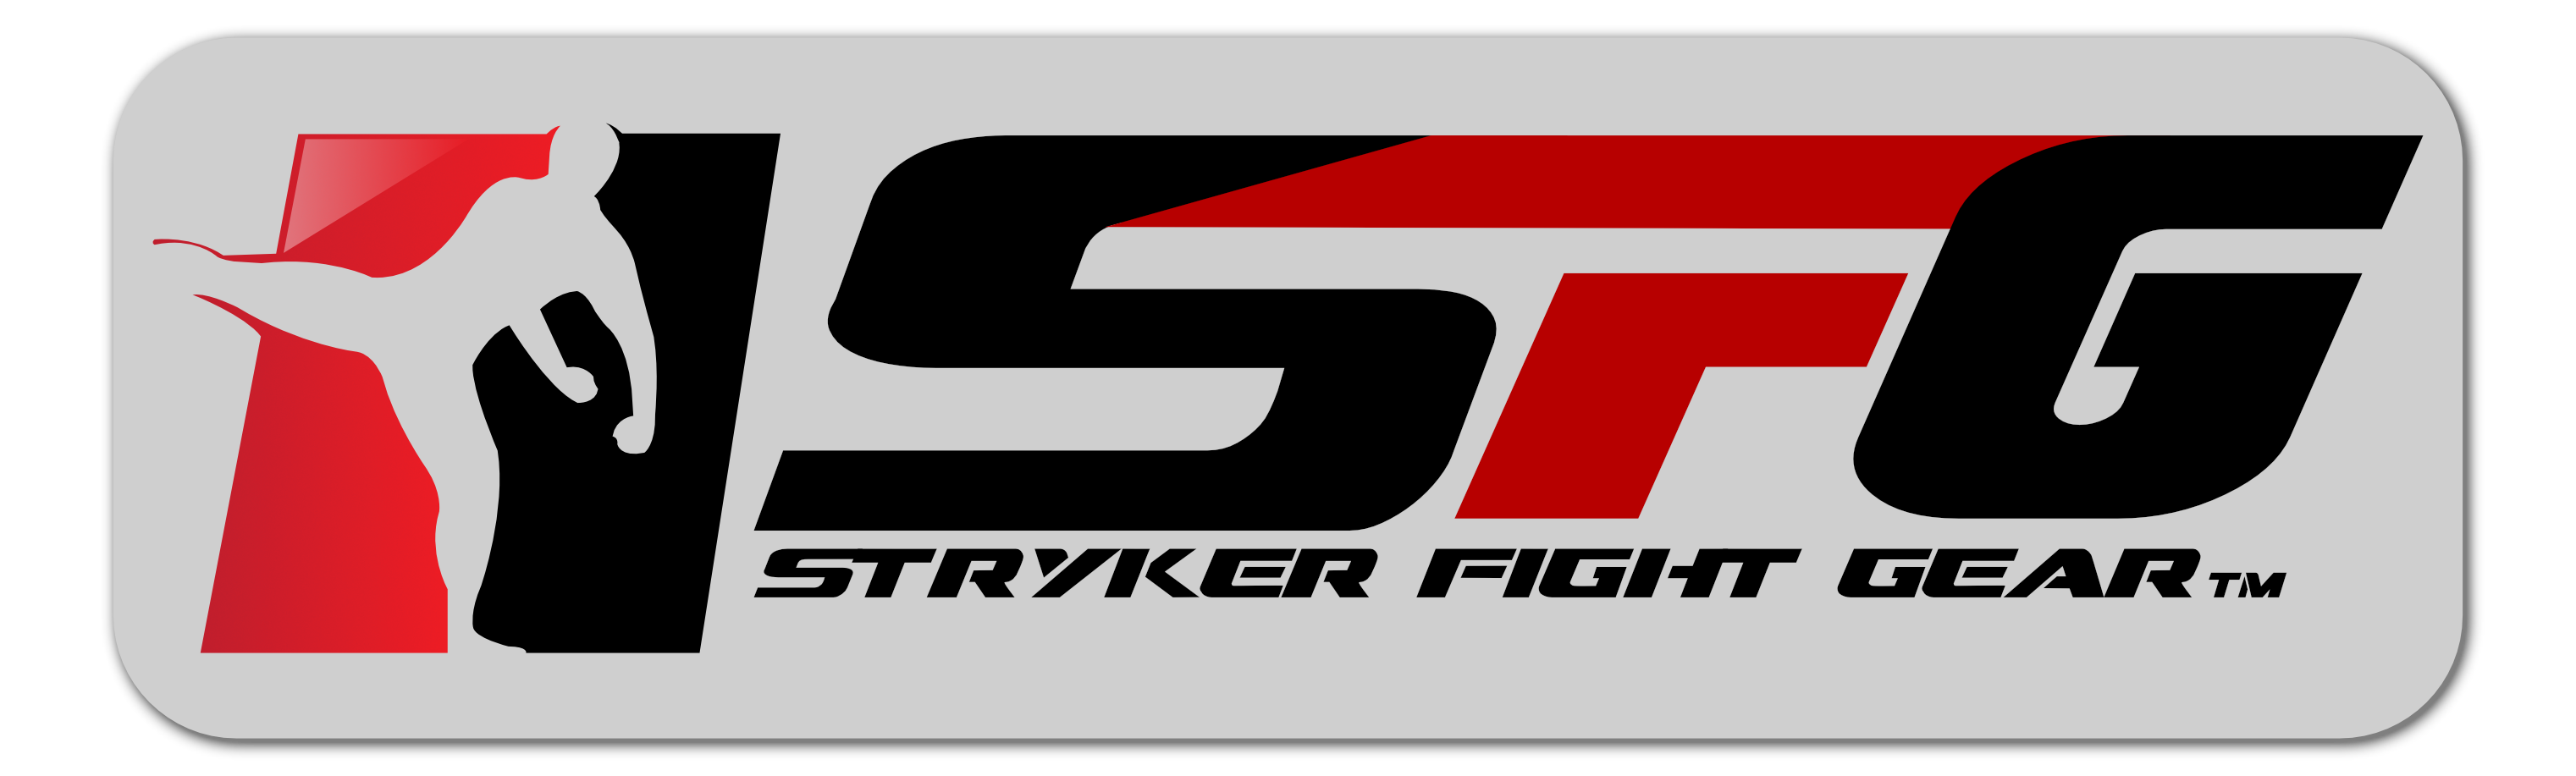 Newest Stryker Fight Gear mma ufc venum sfg logo square.png